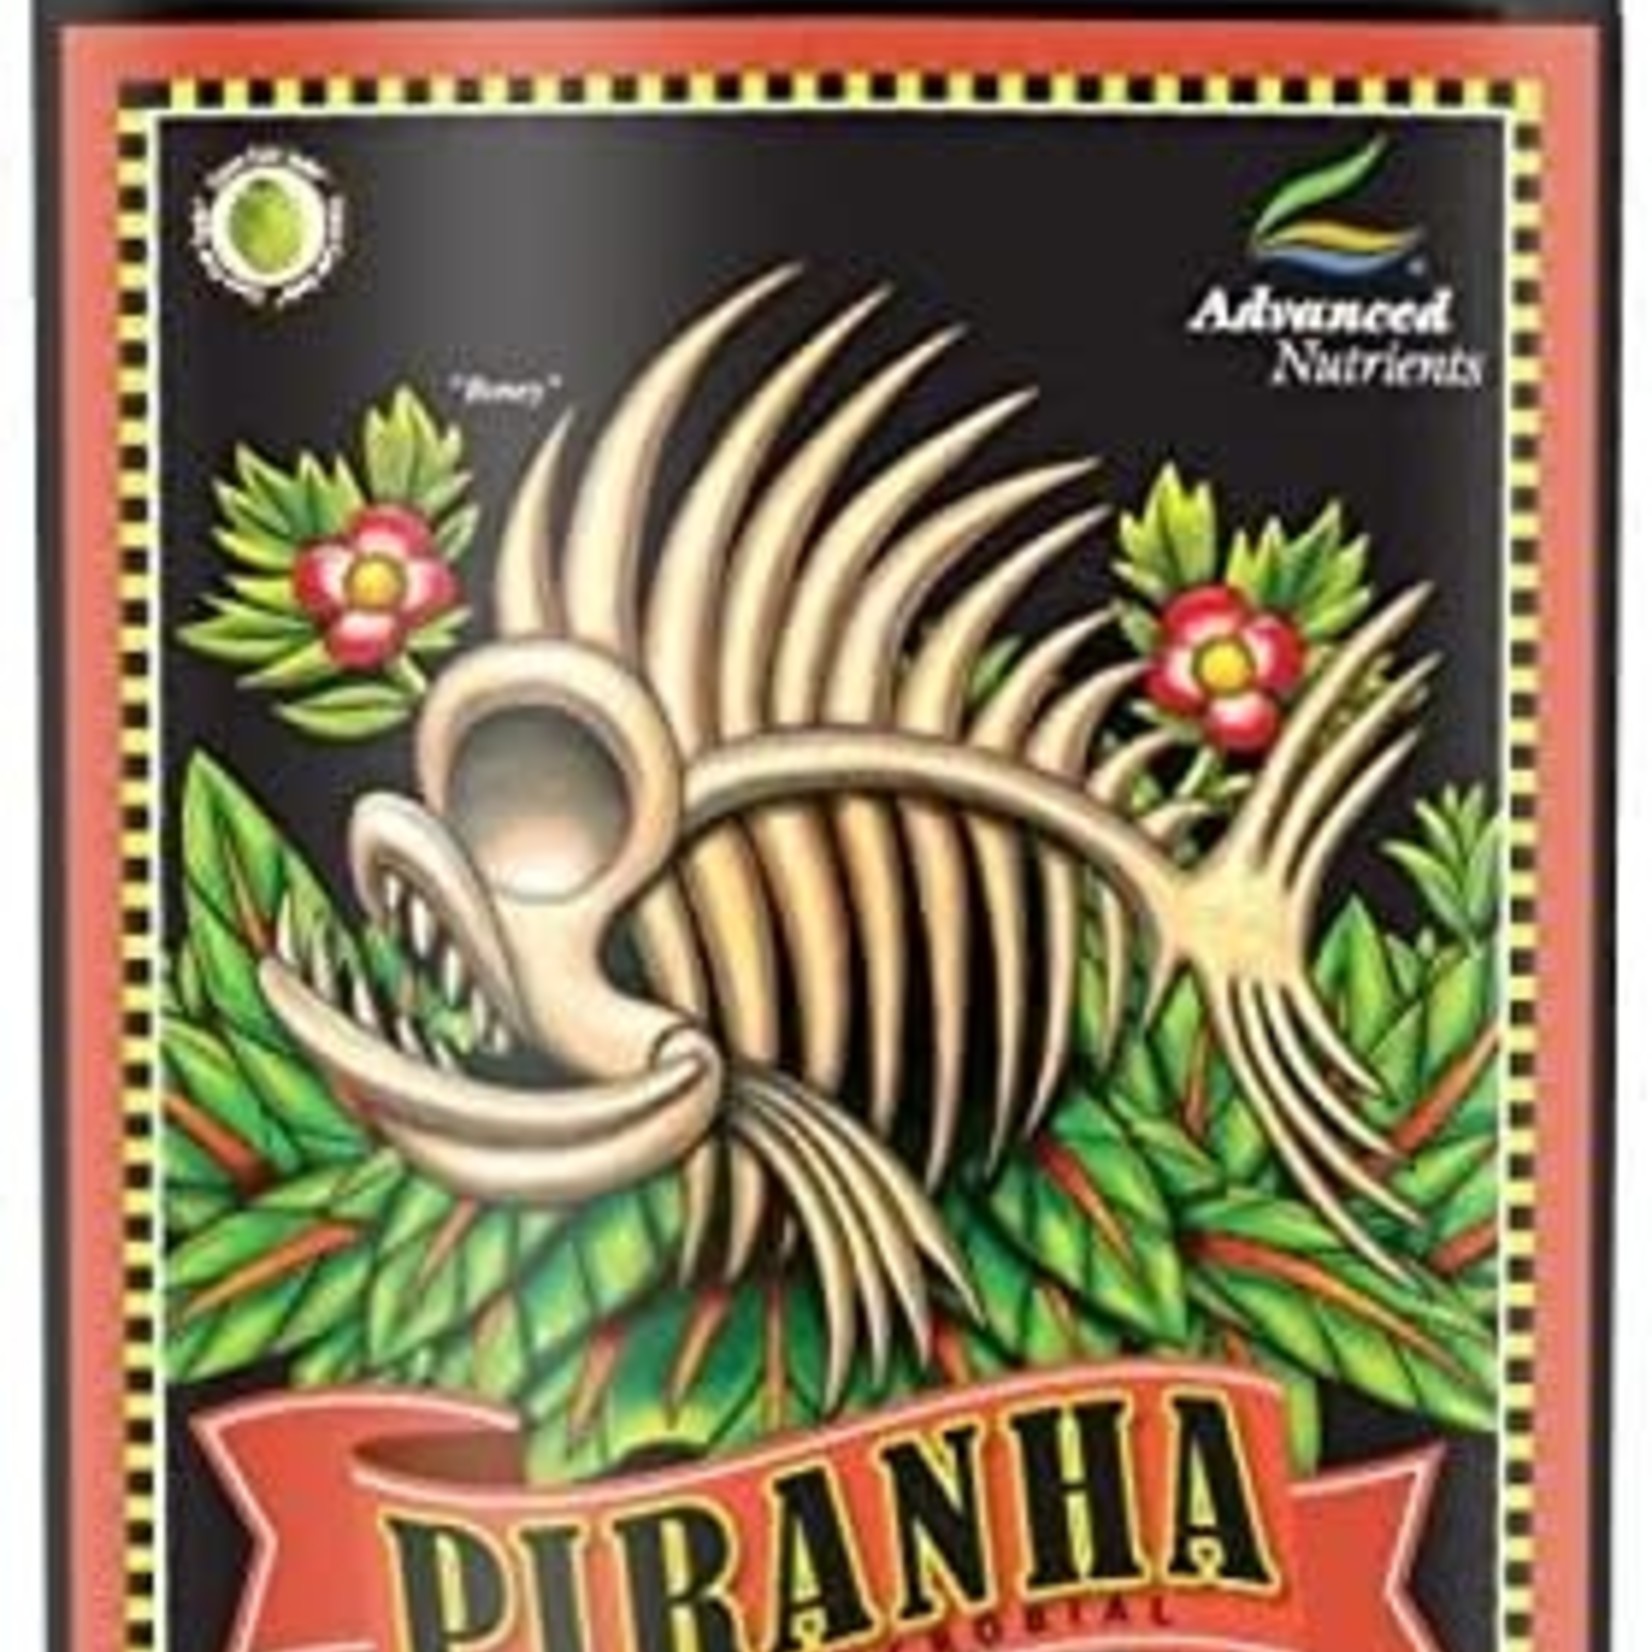 Advanced Nutrients Advanced Nutrients Piranha 4L